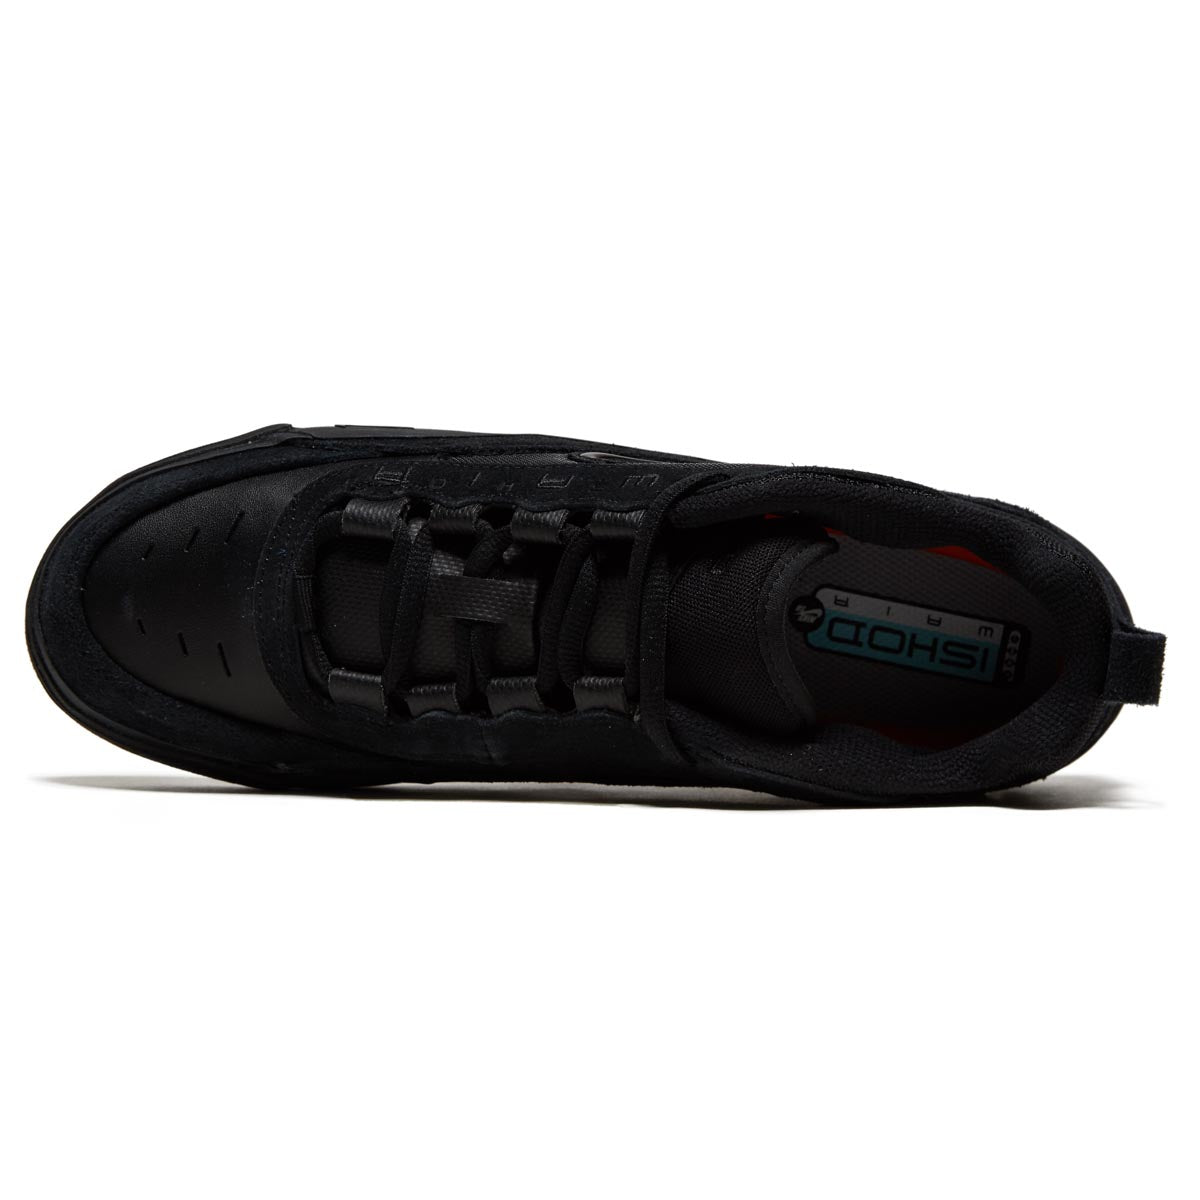 Nike SB Air Max Ishod Shoes - Black/Black/Anthracite/Black image 3